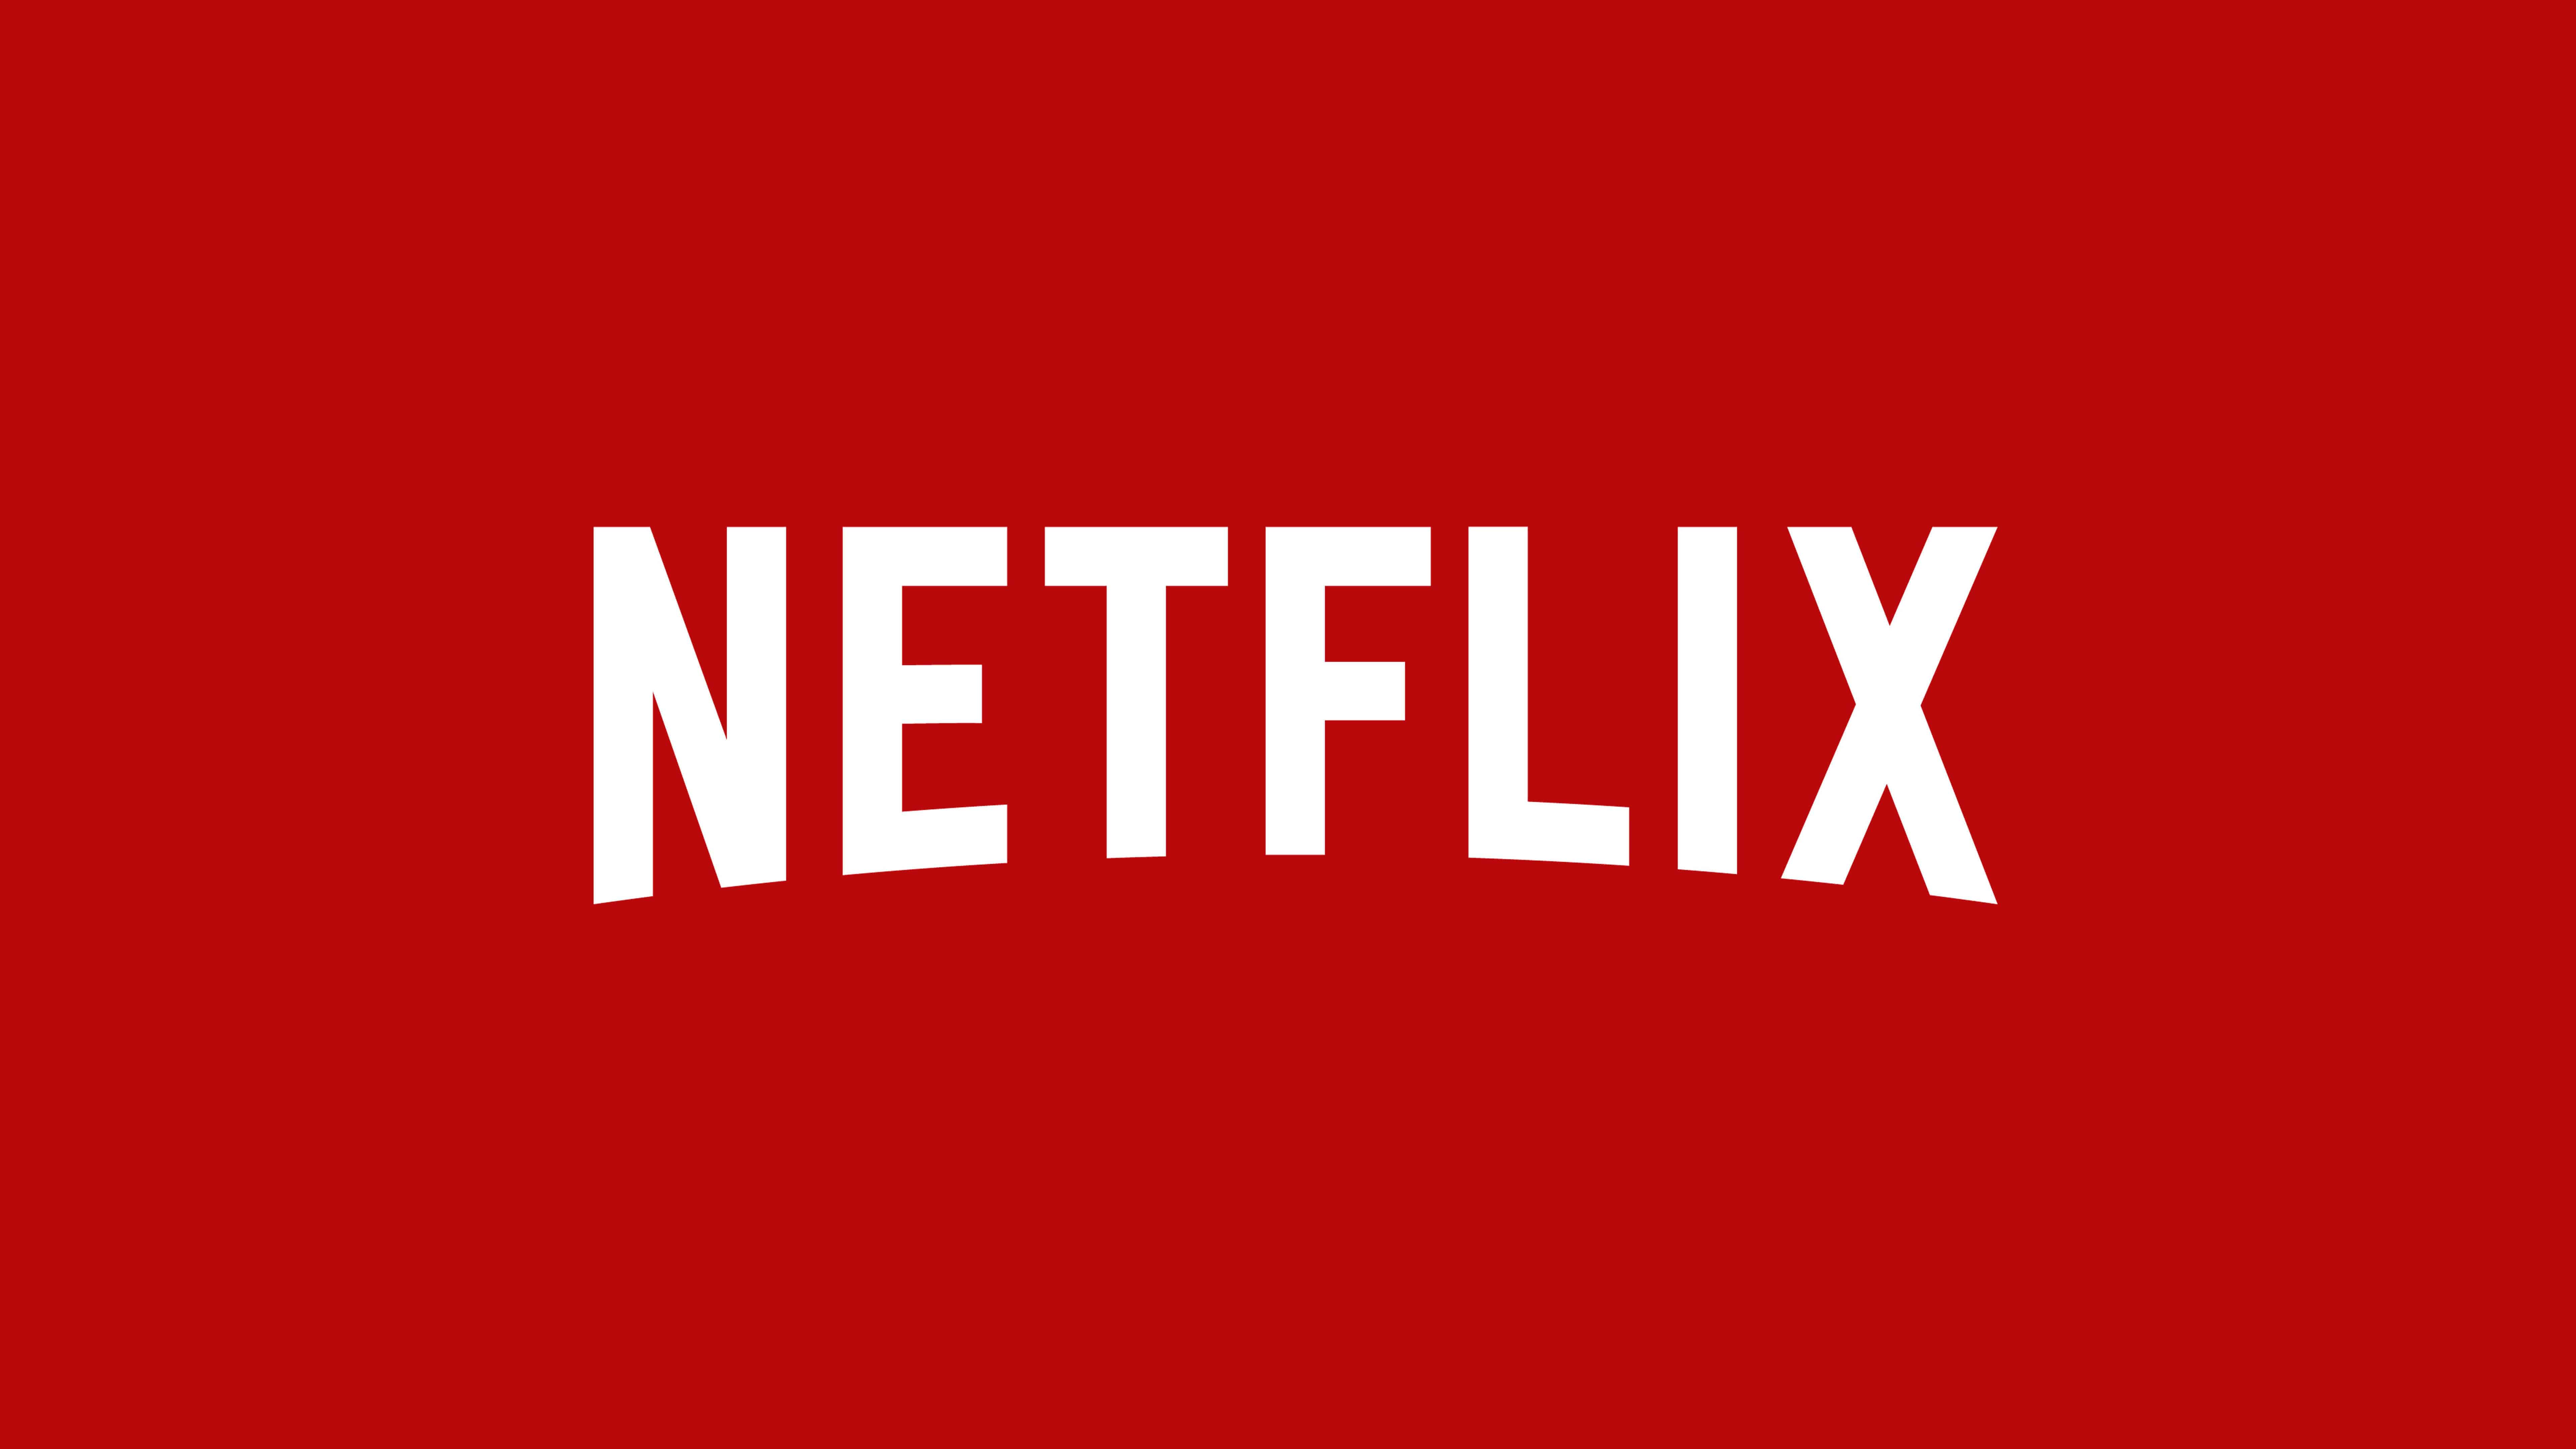 Netflix logo on a red background - Netflix